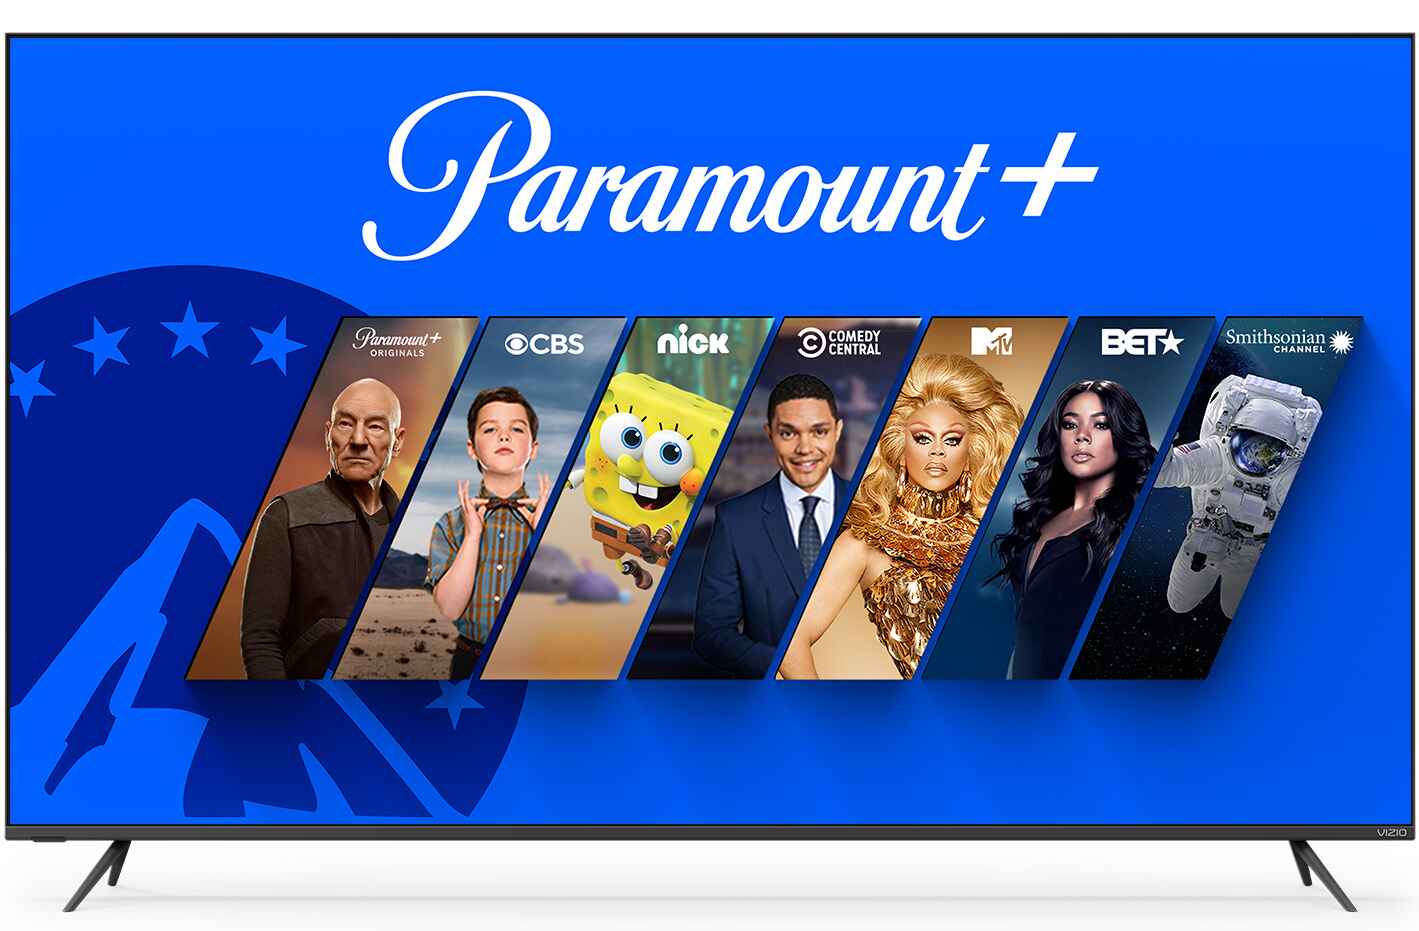 How To Add Paramount Plus To Vizio Smart TV